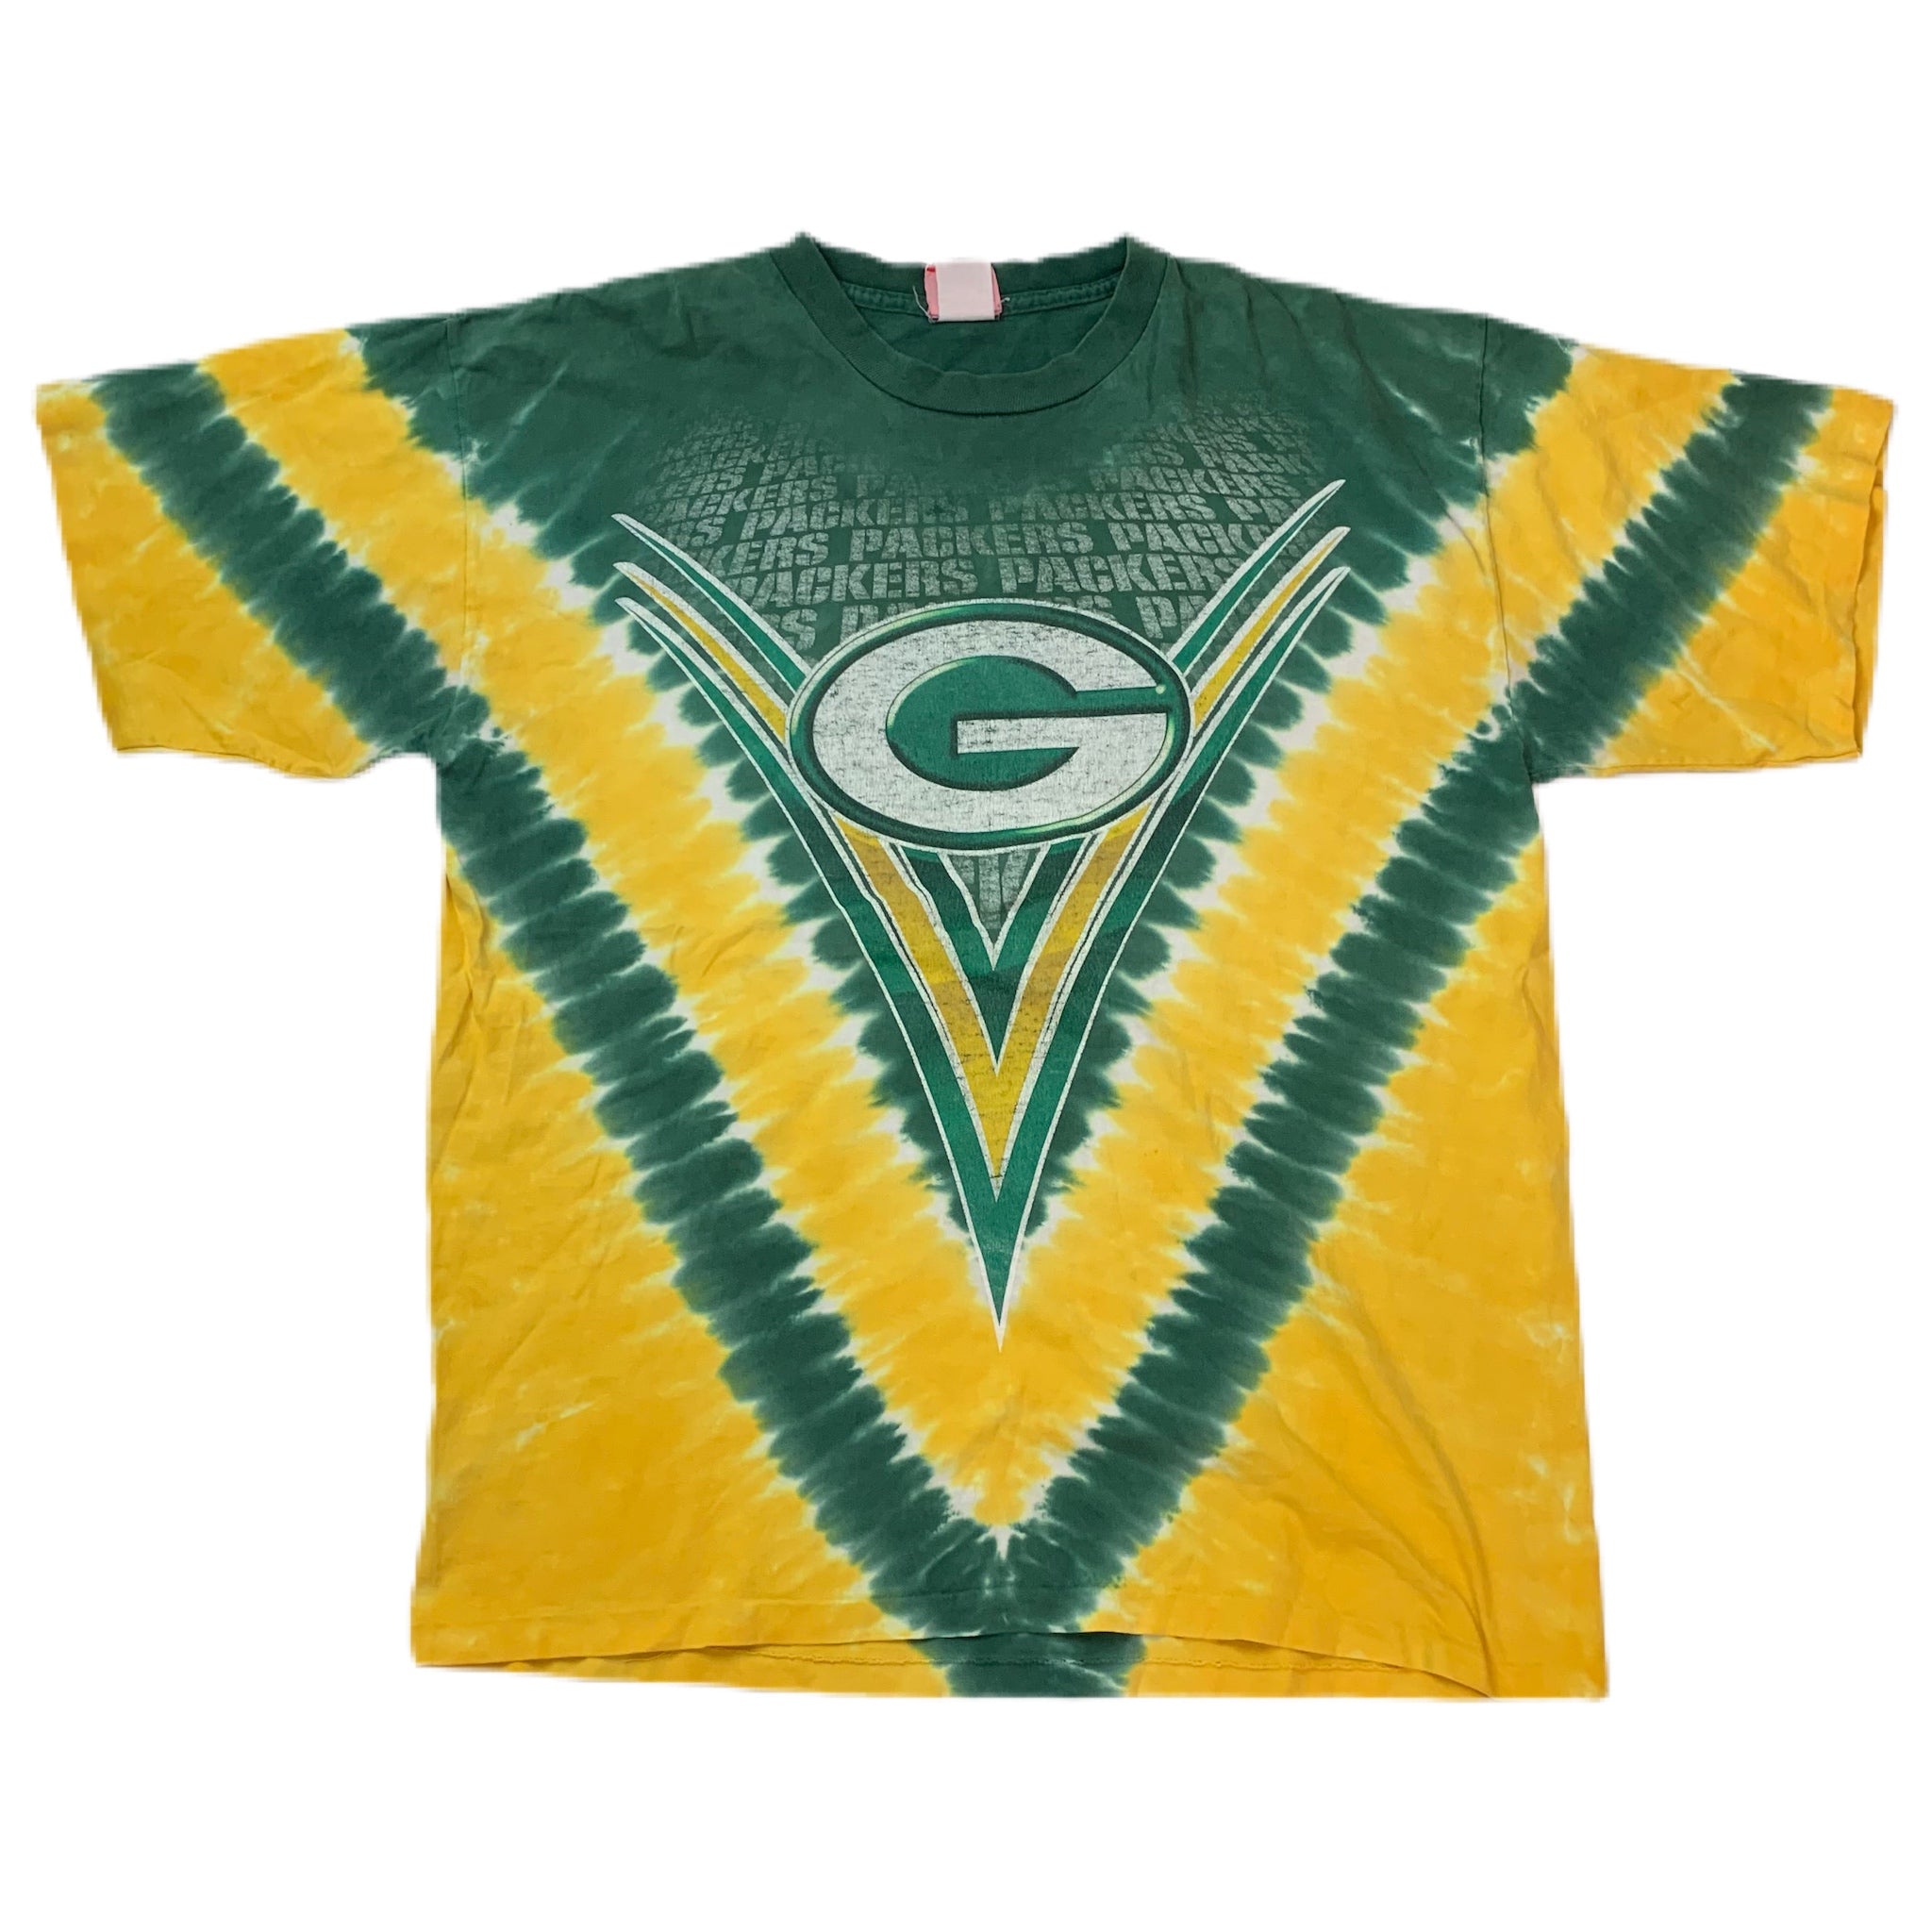 Vintage Green Bay Packers Tie Dye Shirt - Green & Yellow Tie Dye Shirt